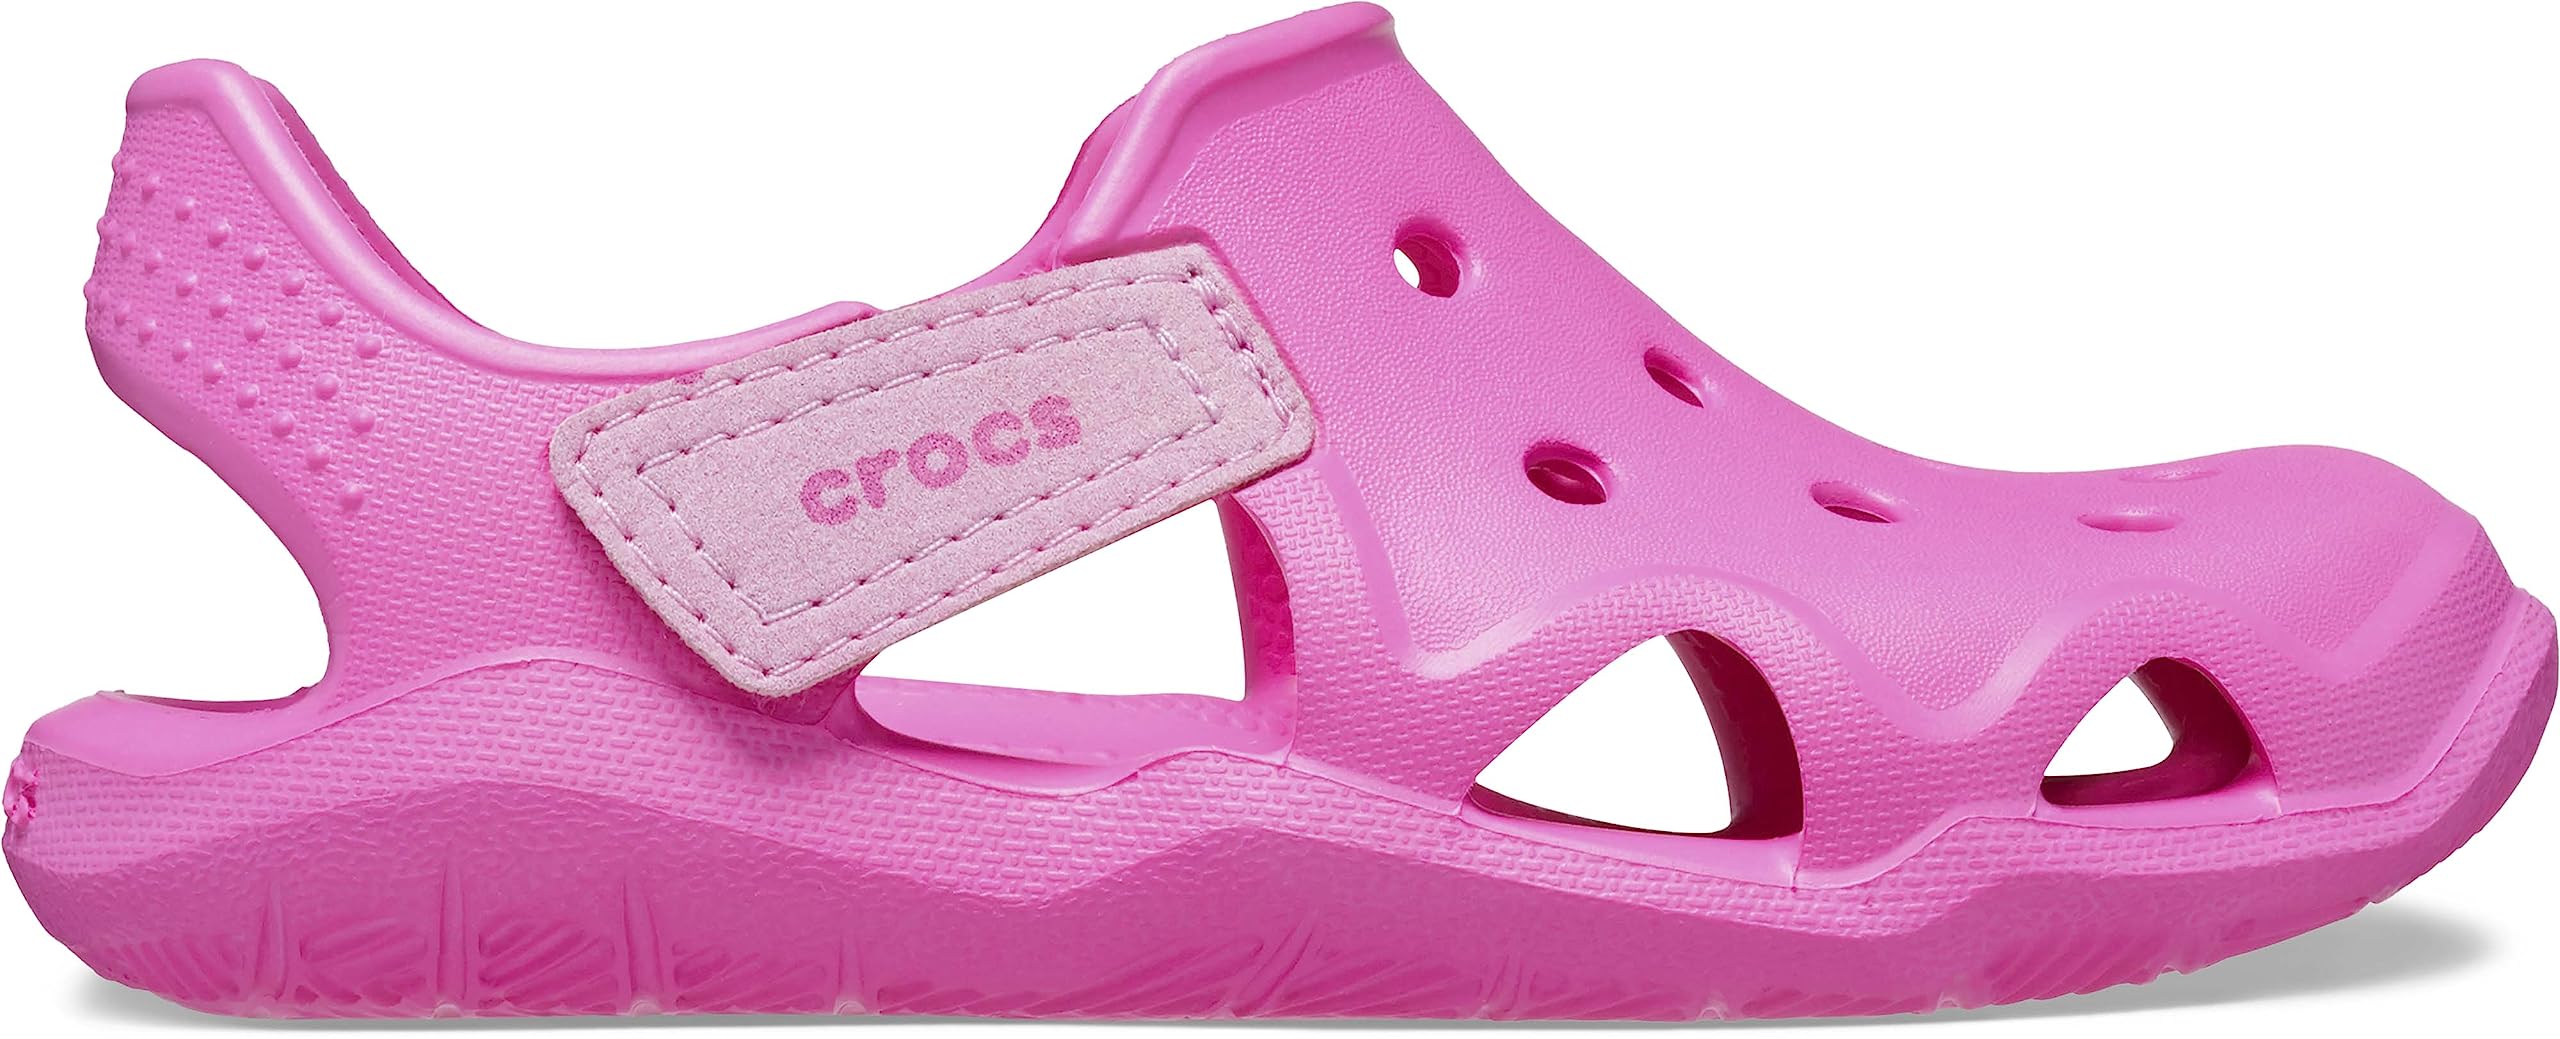 Crocs unisex-child Kids' Swiftwater Wave